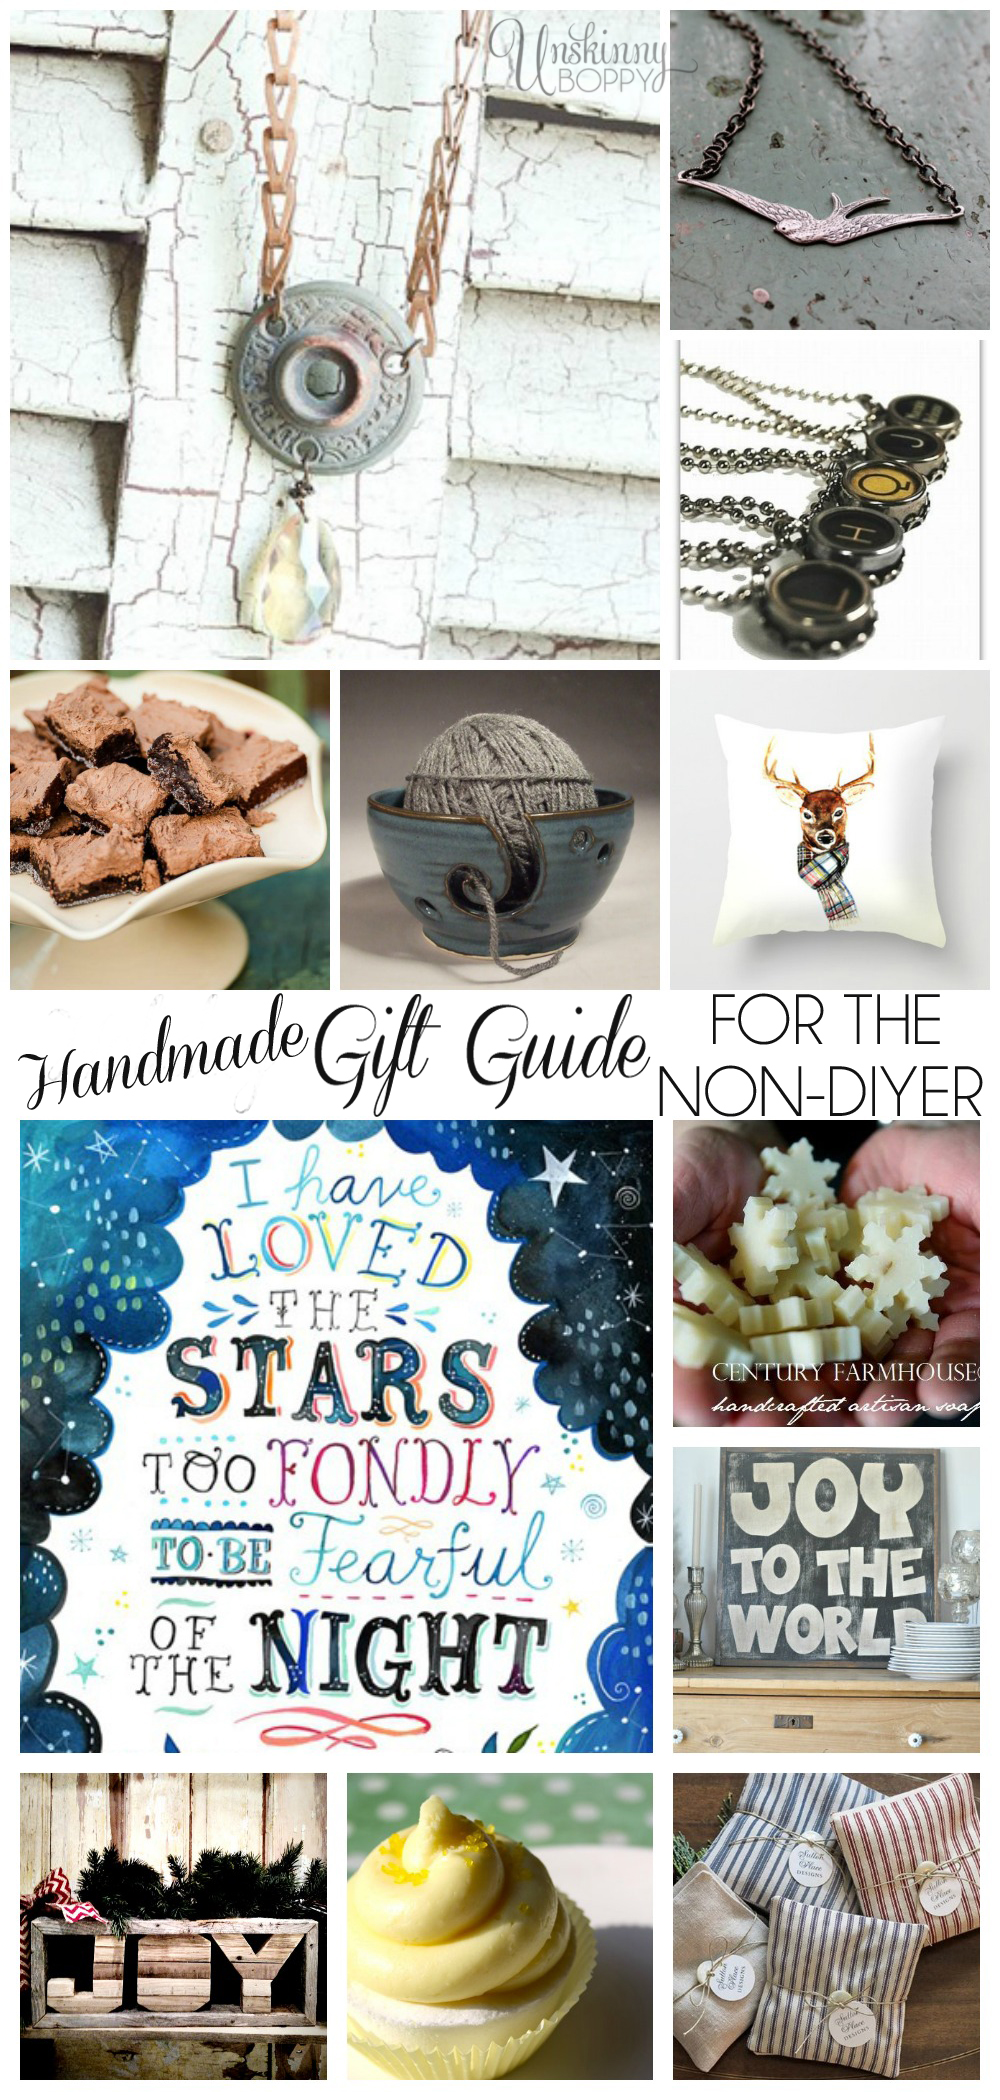 Handmade gift guide for the non-diyer